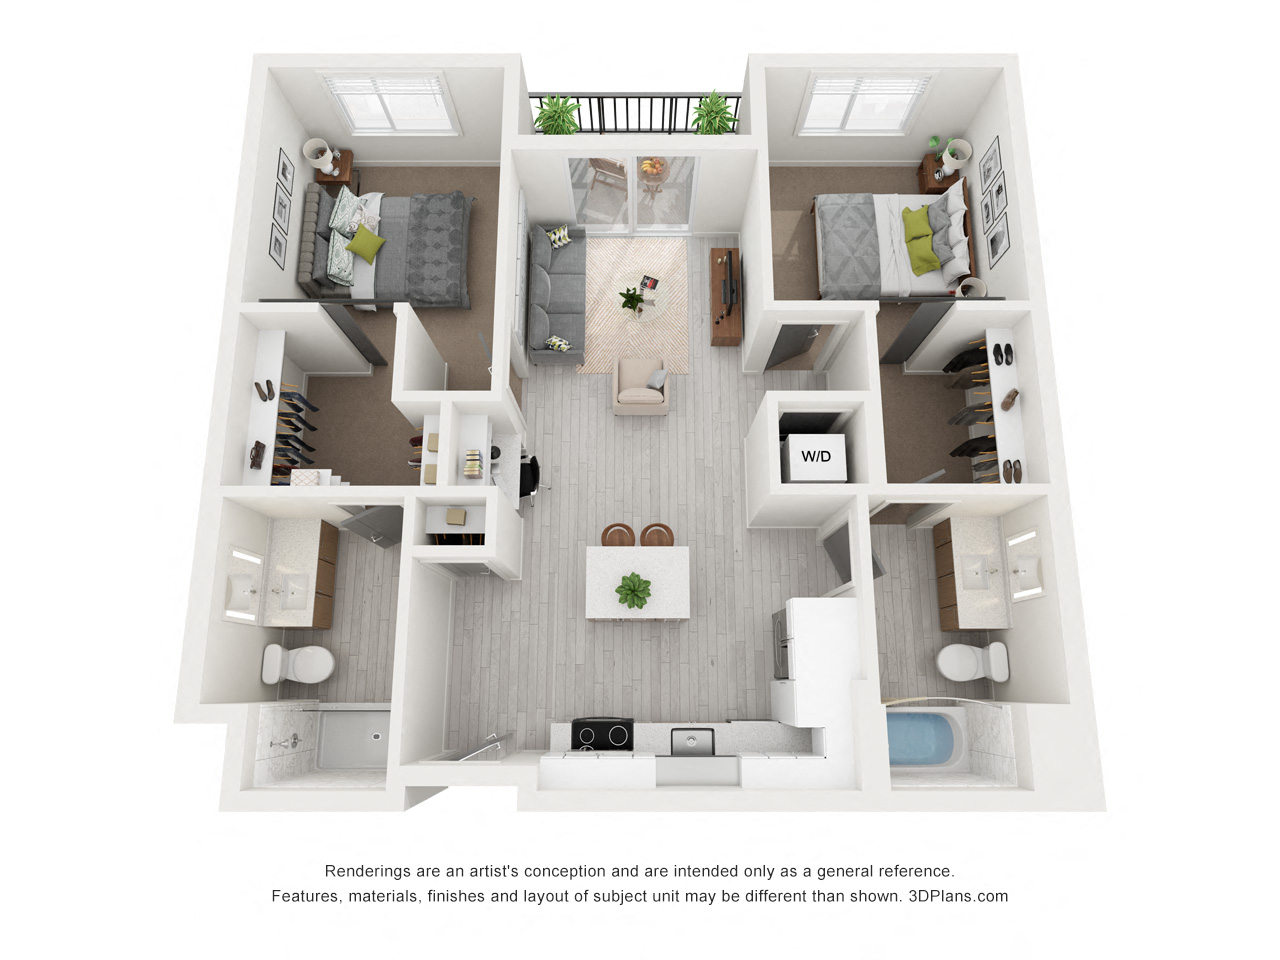 The Eisley_B1 2 bedroom floor plan